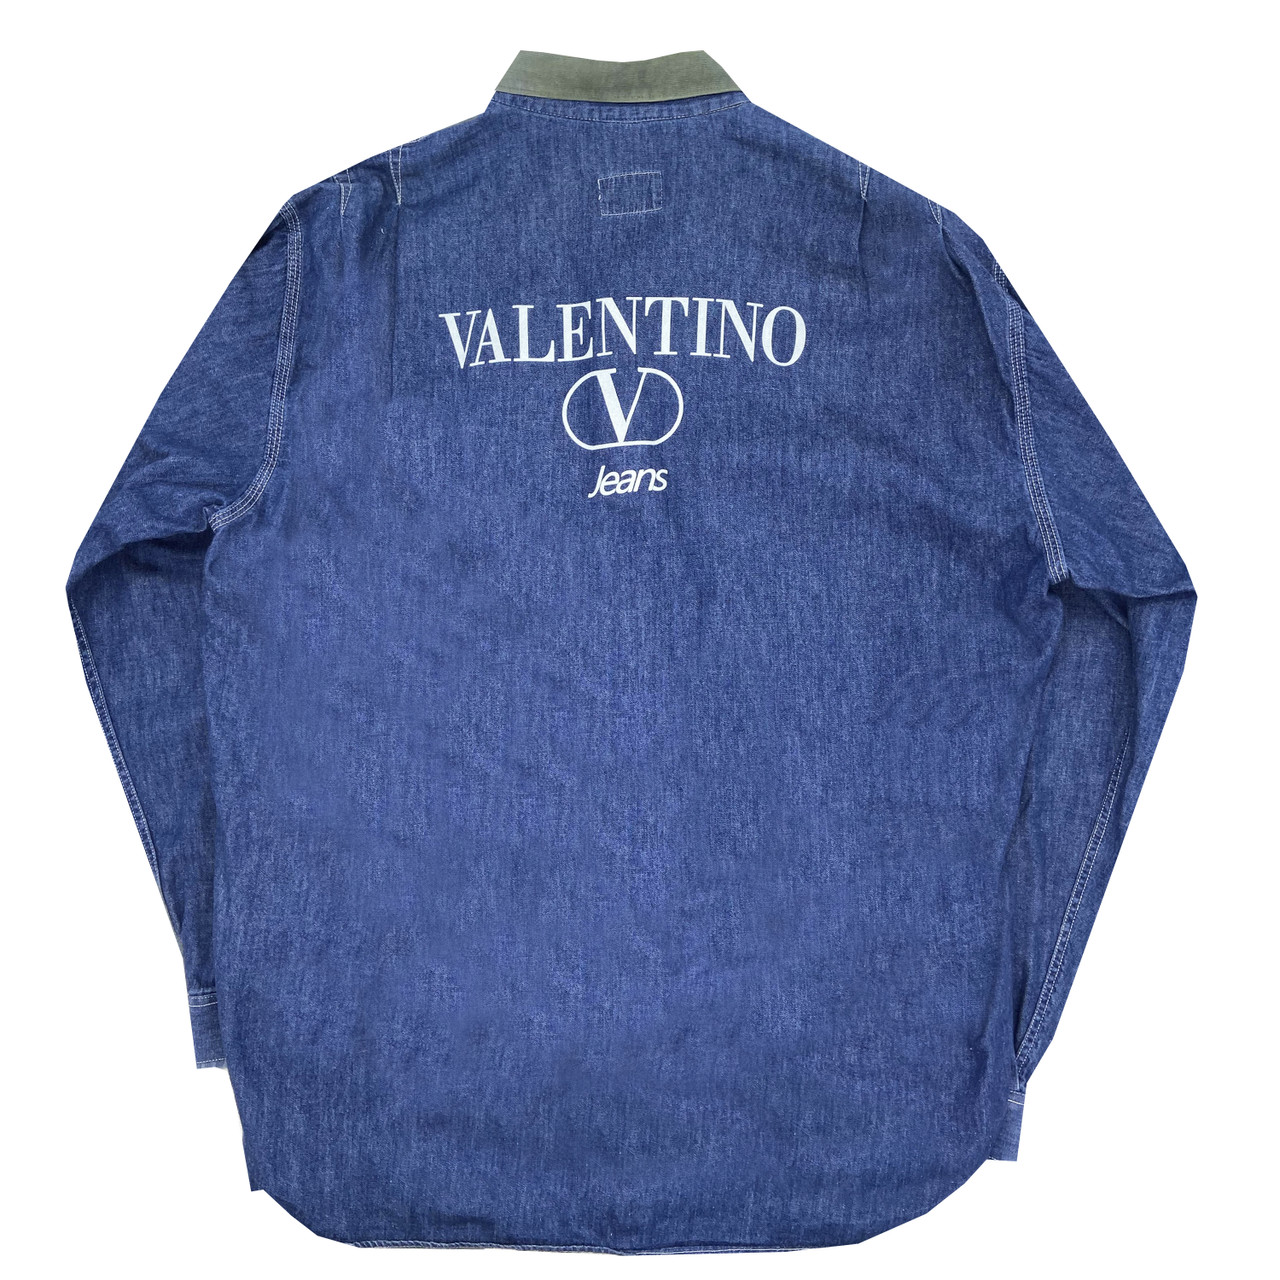 vintage valentino jeans